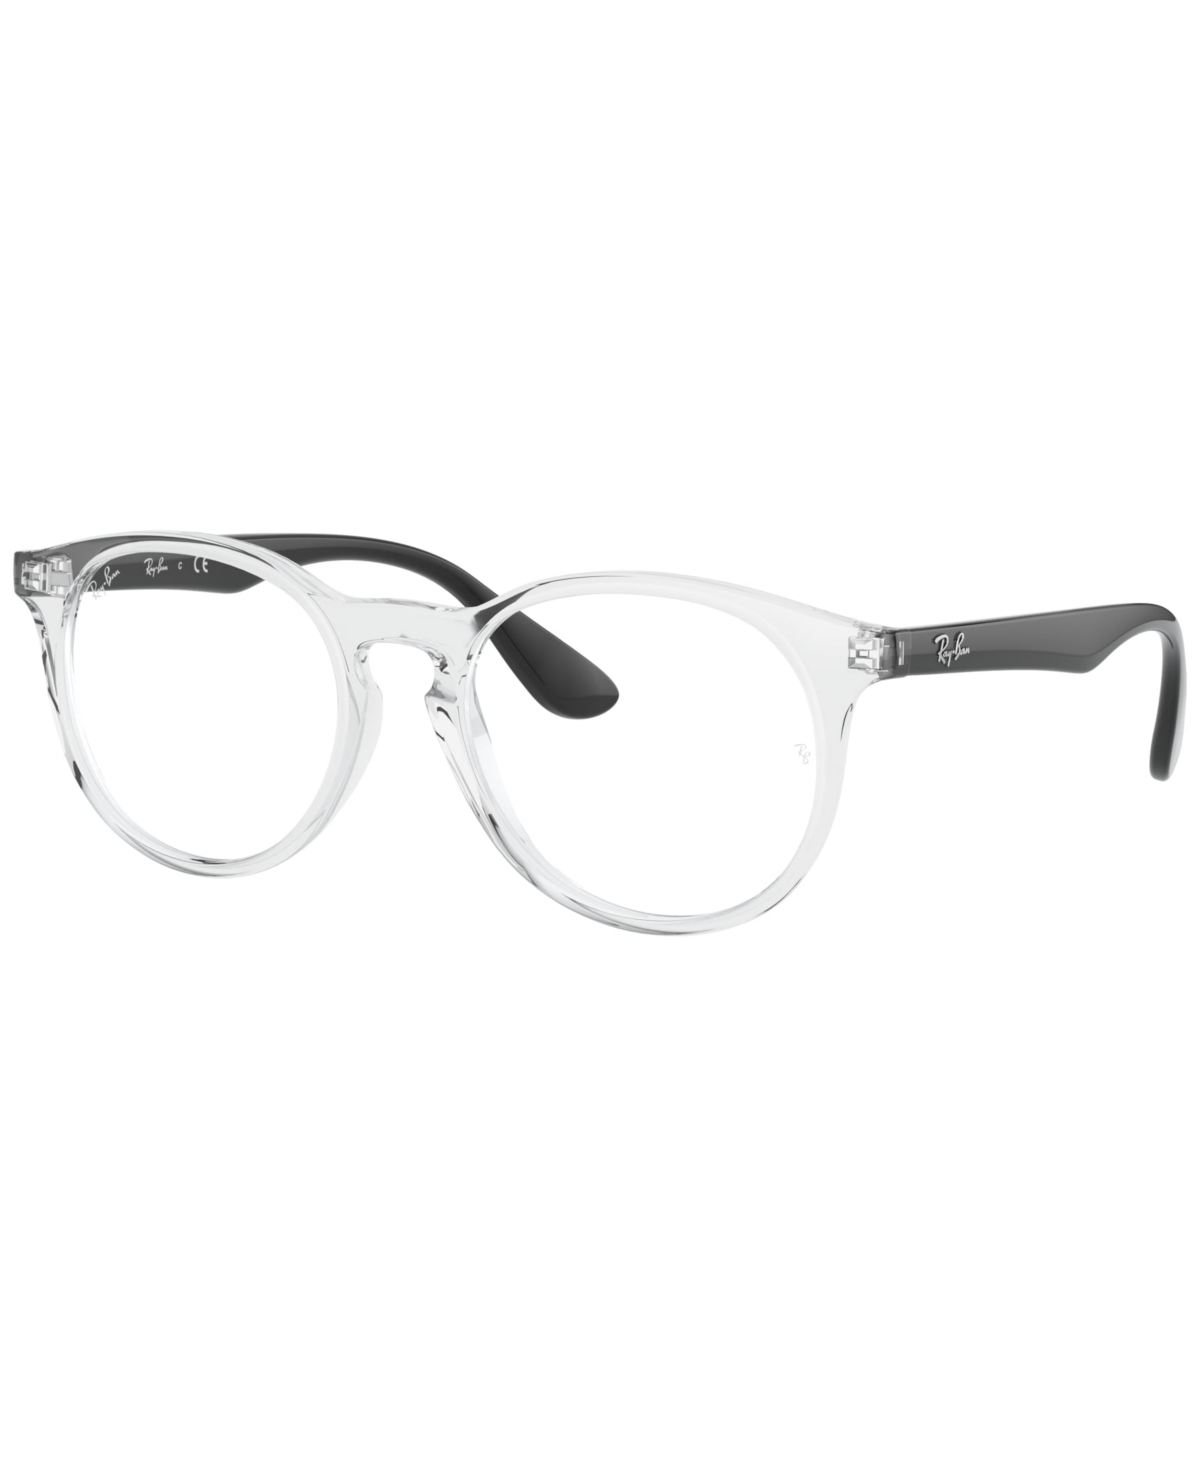 Child Eyeglasses, RB1554 - Transparent